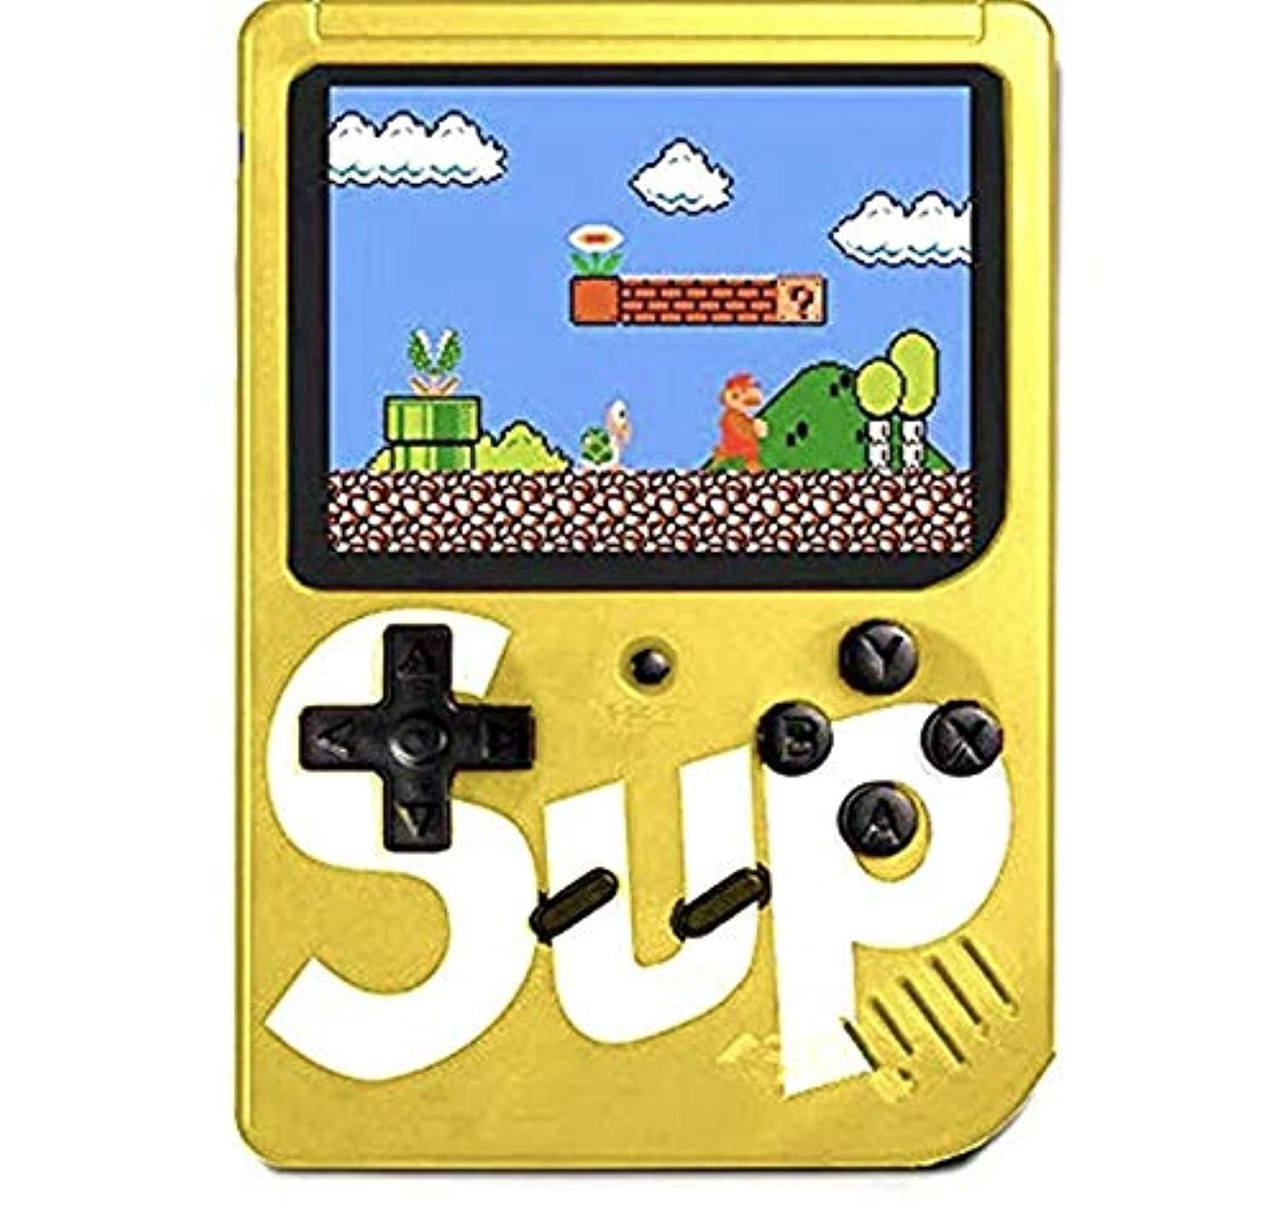 Sup Game Box 400 in 1 Games Retro Portable Mini Handheld Game